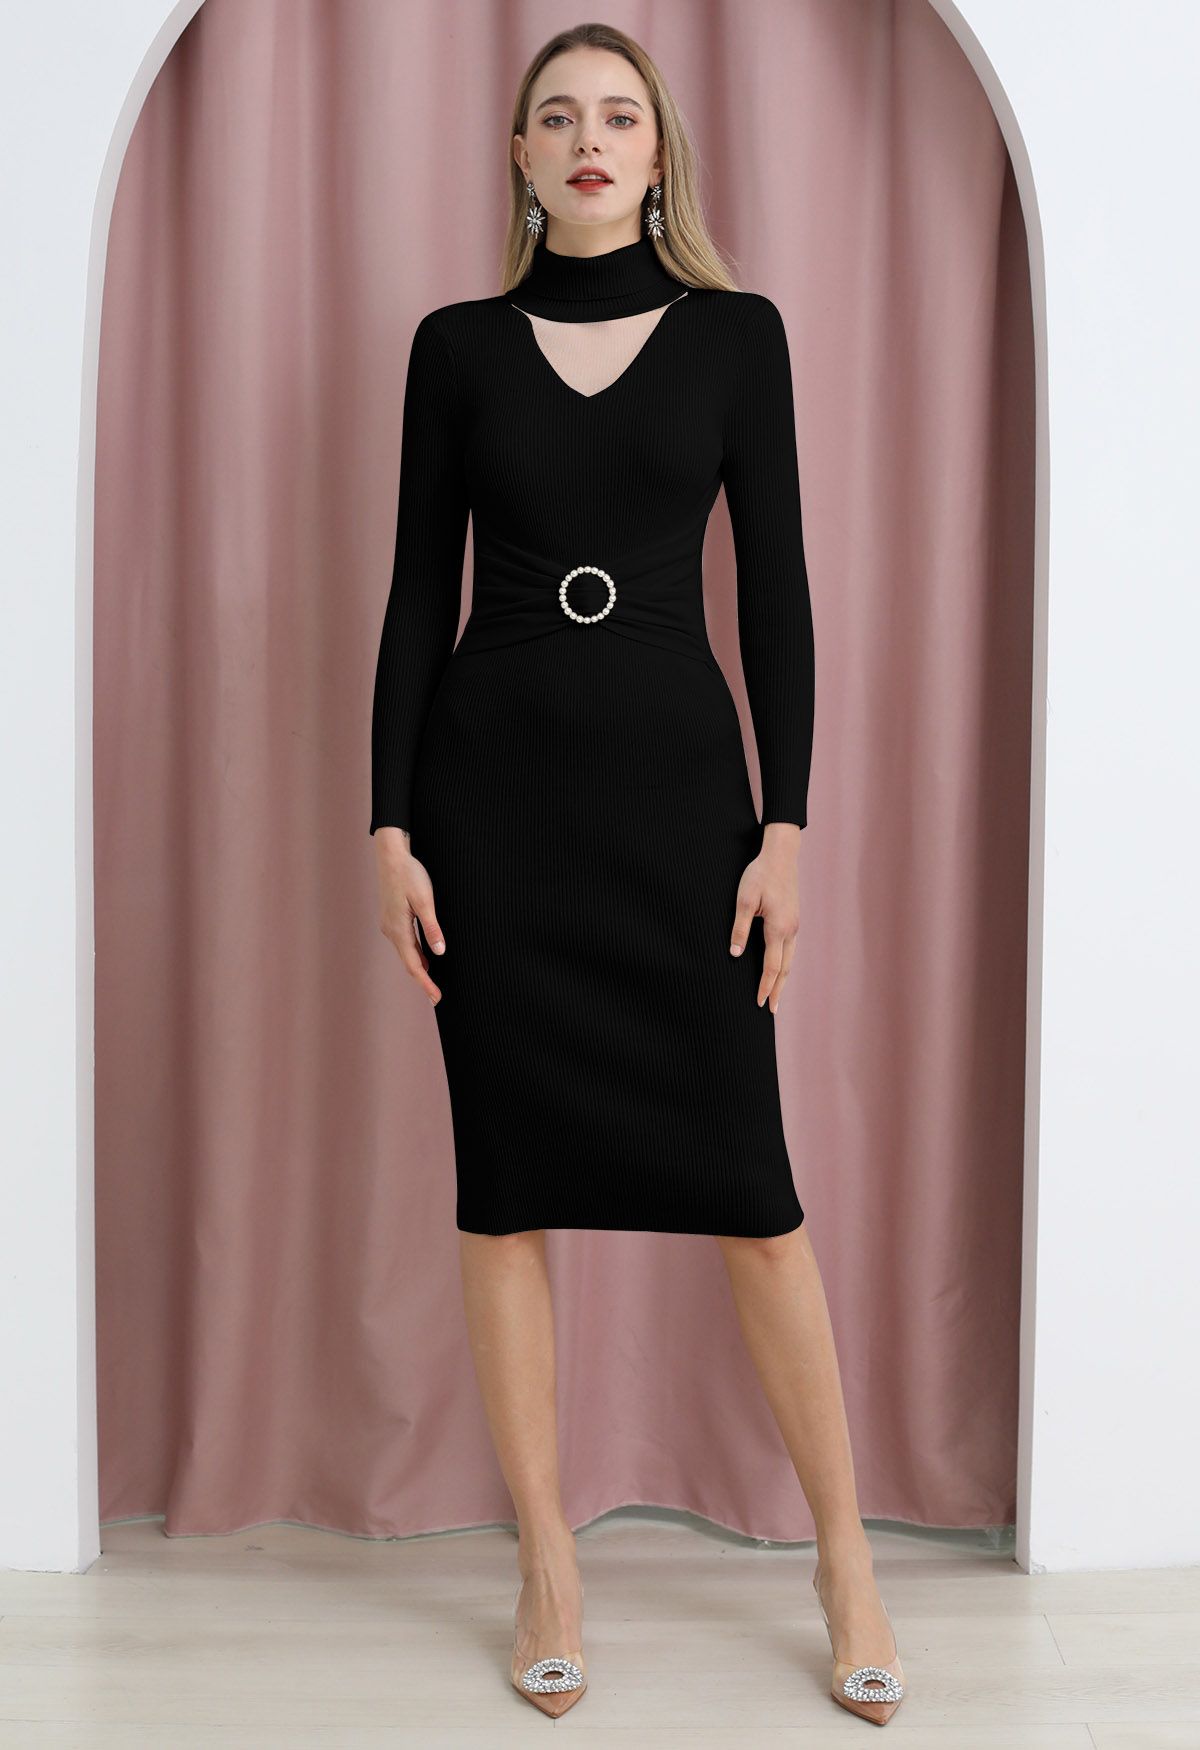 Turtleneck Mesh Inserted O-Ring Waist Knit Dress in Black